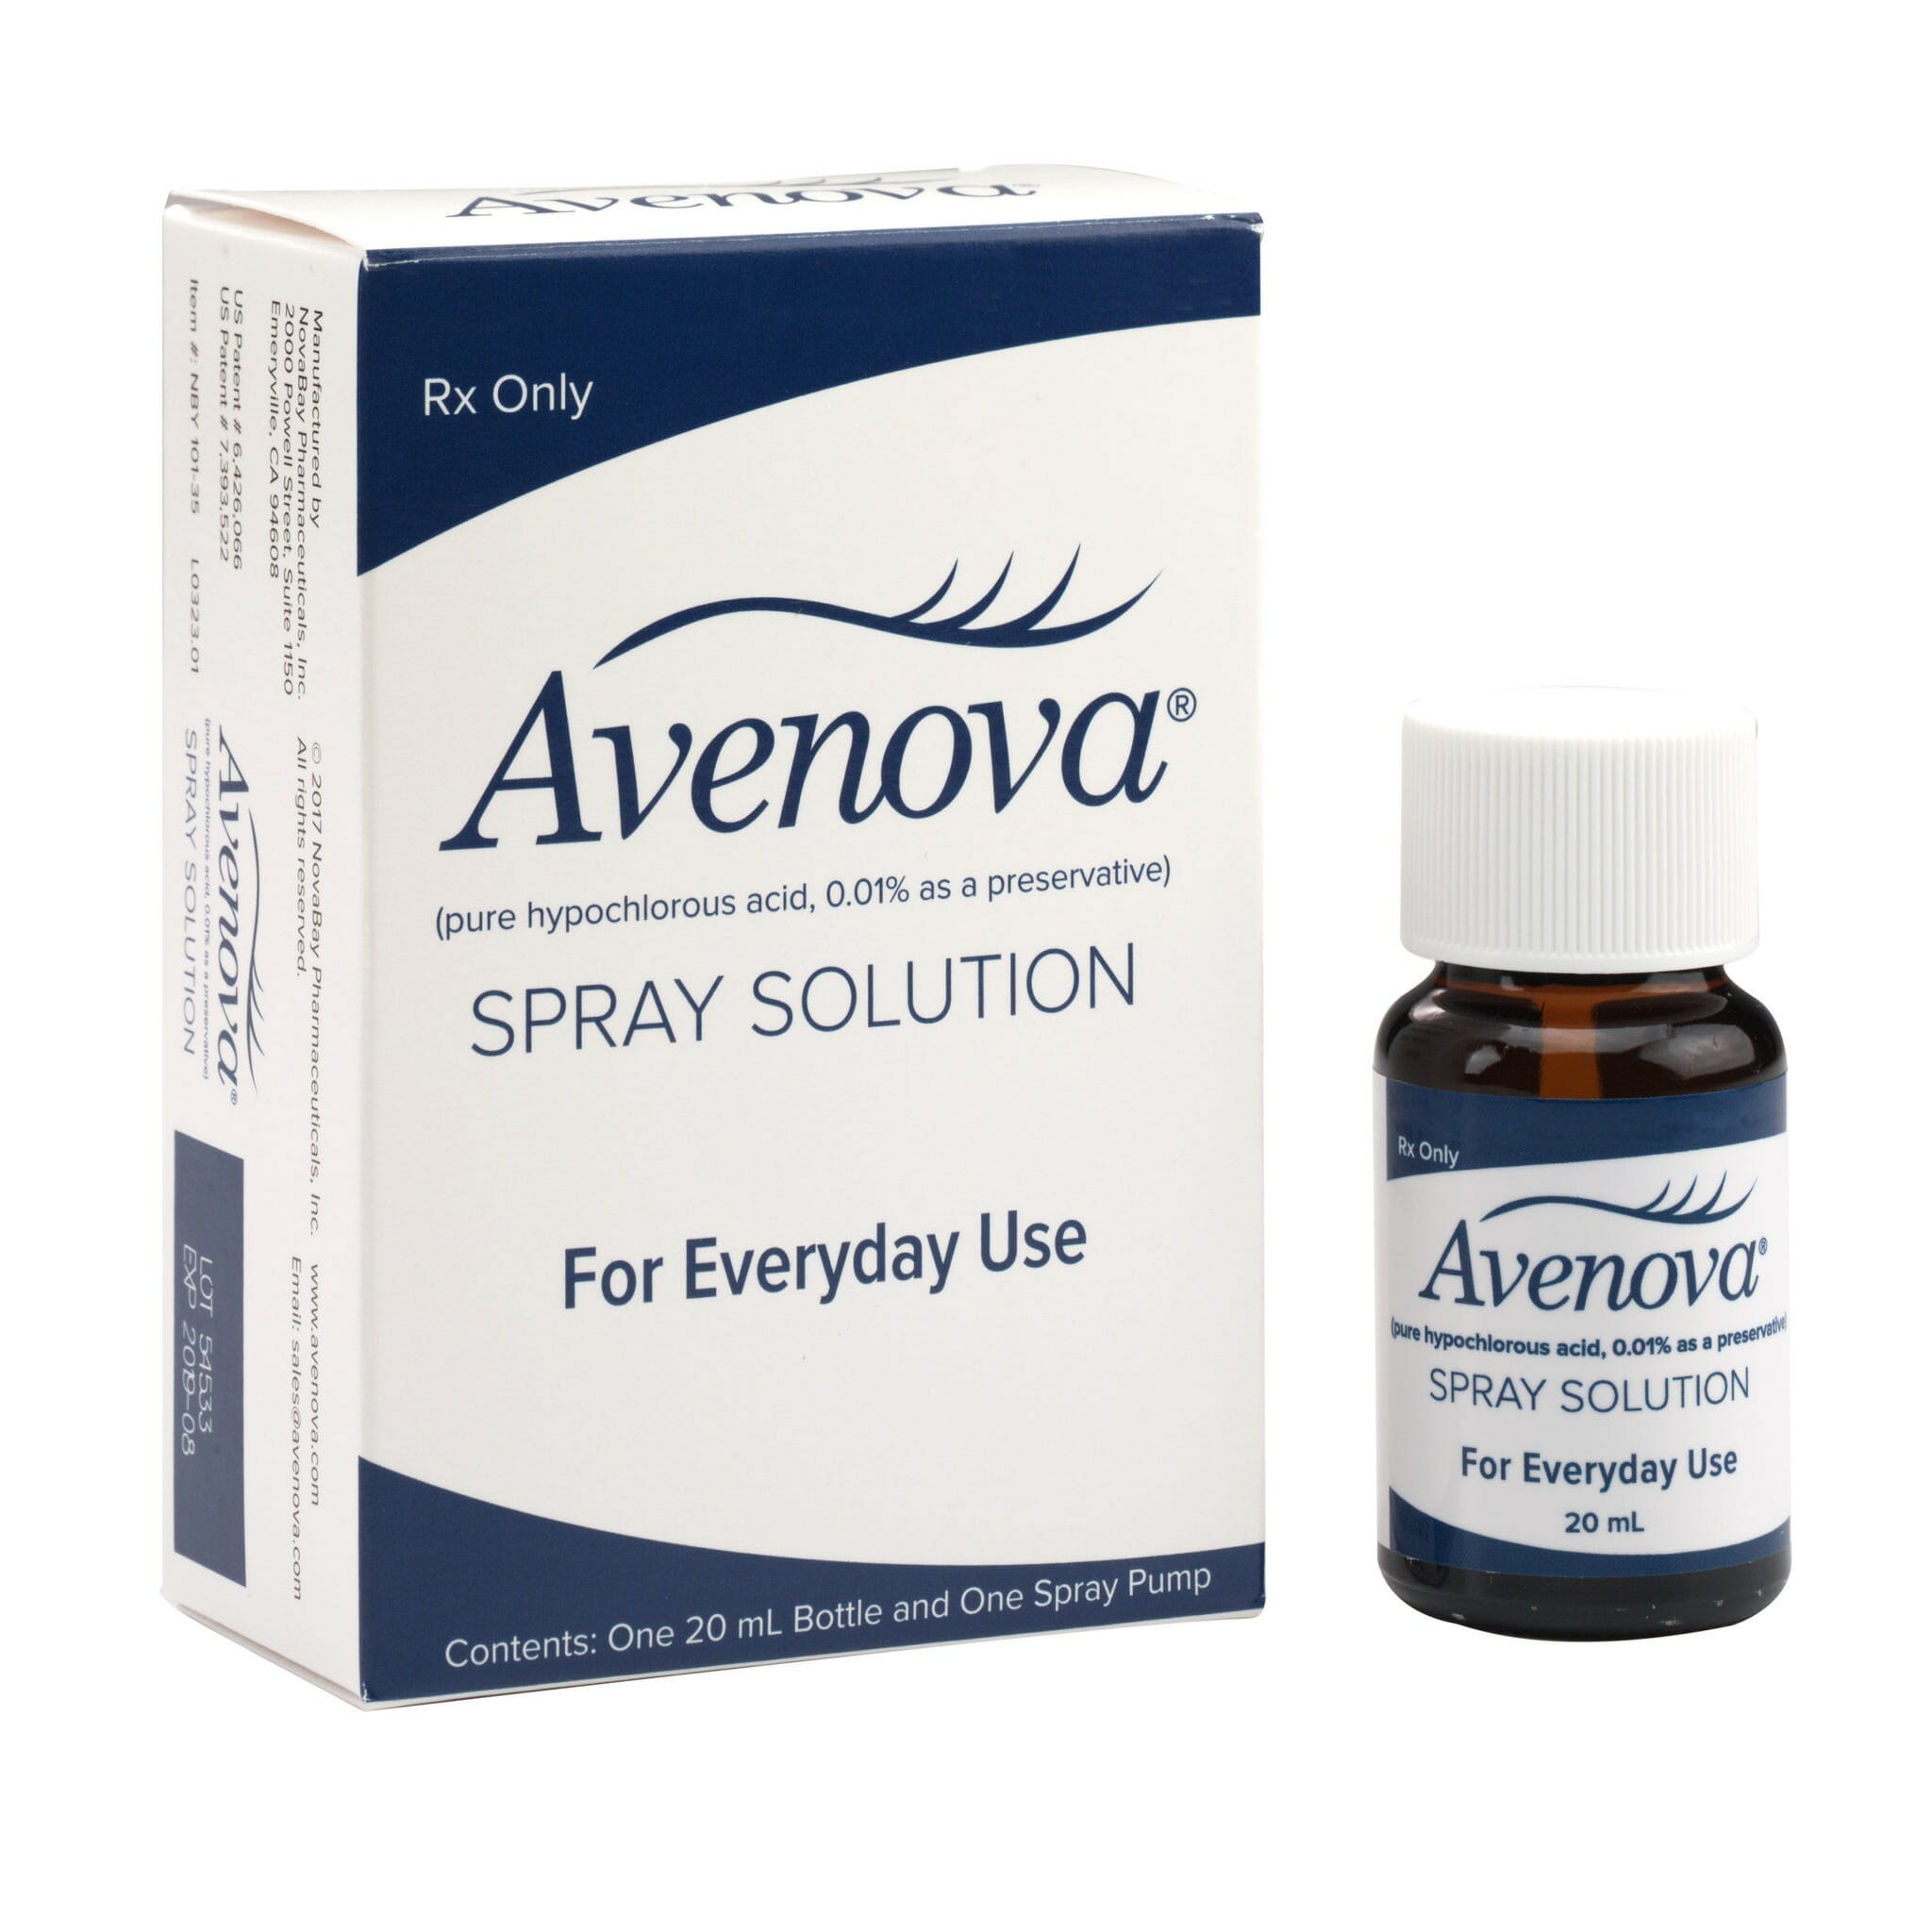 What's in the Avenova eyelid and eyelash cleanser?